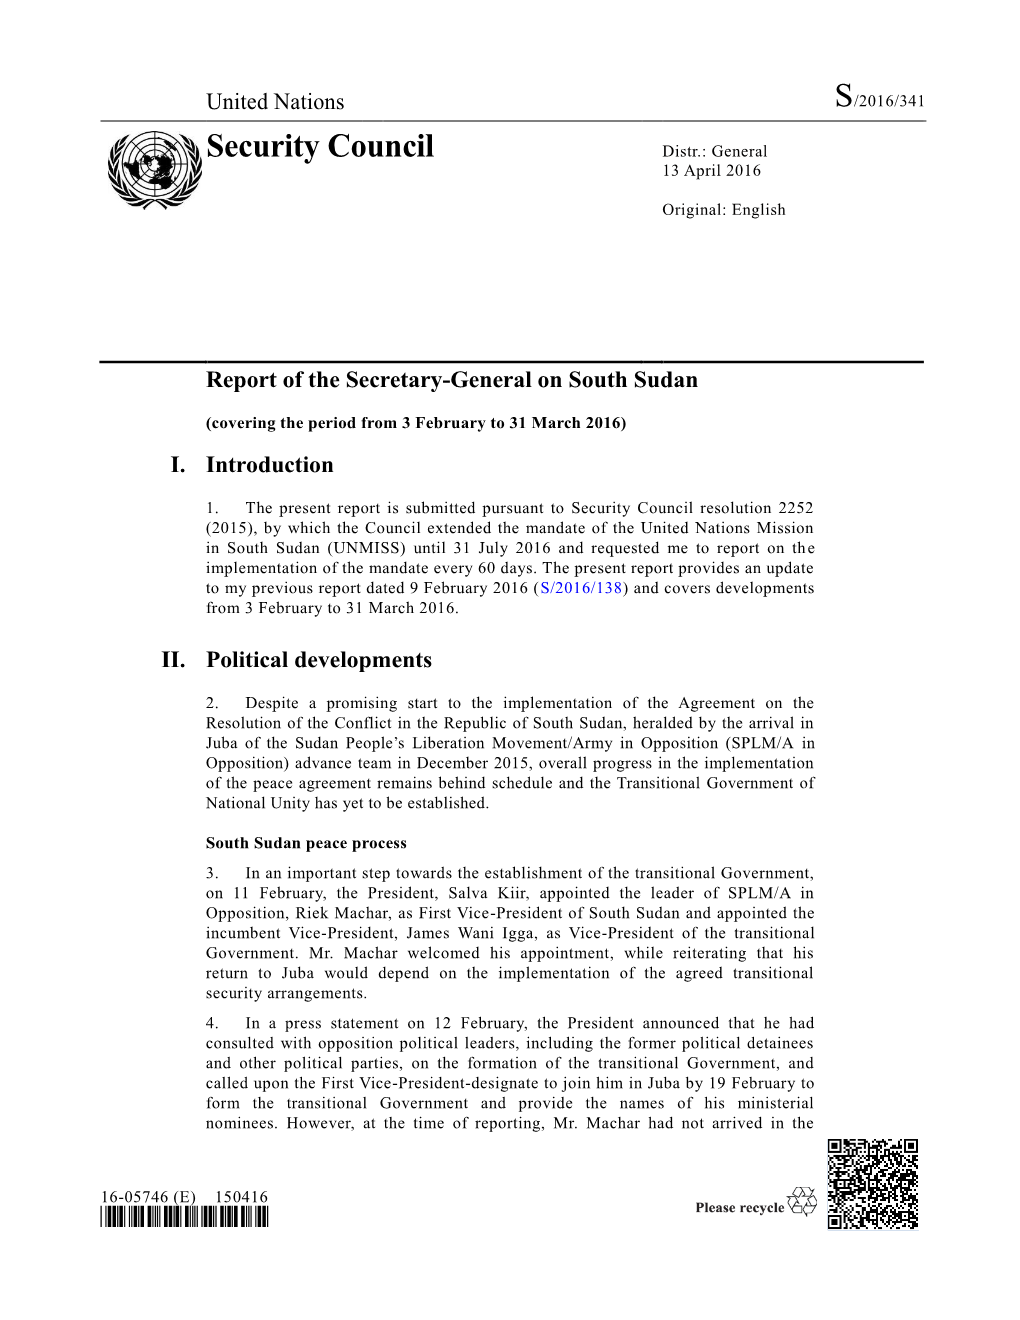 Secretary-General's Report on South Sudan (April 2016)